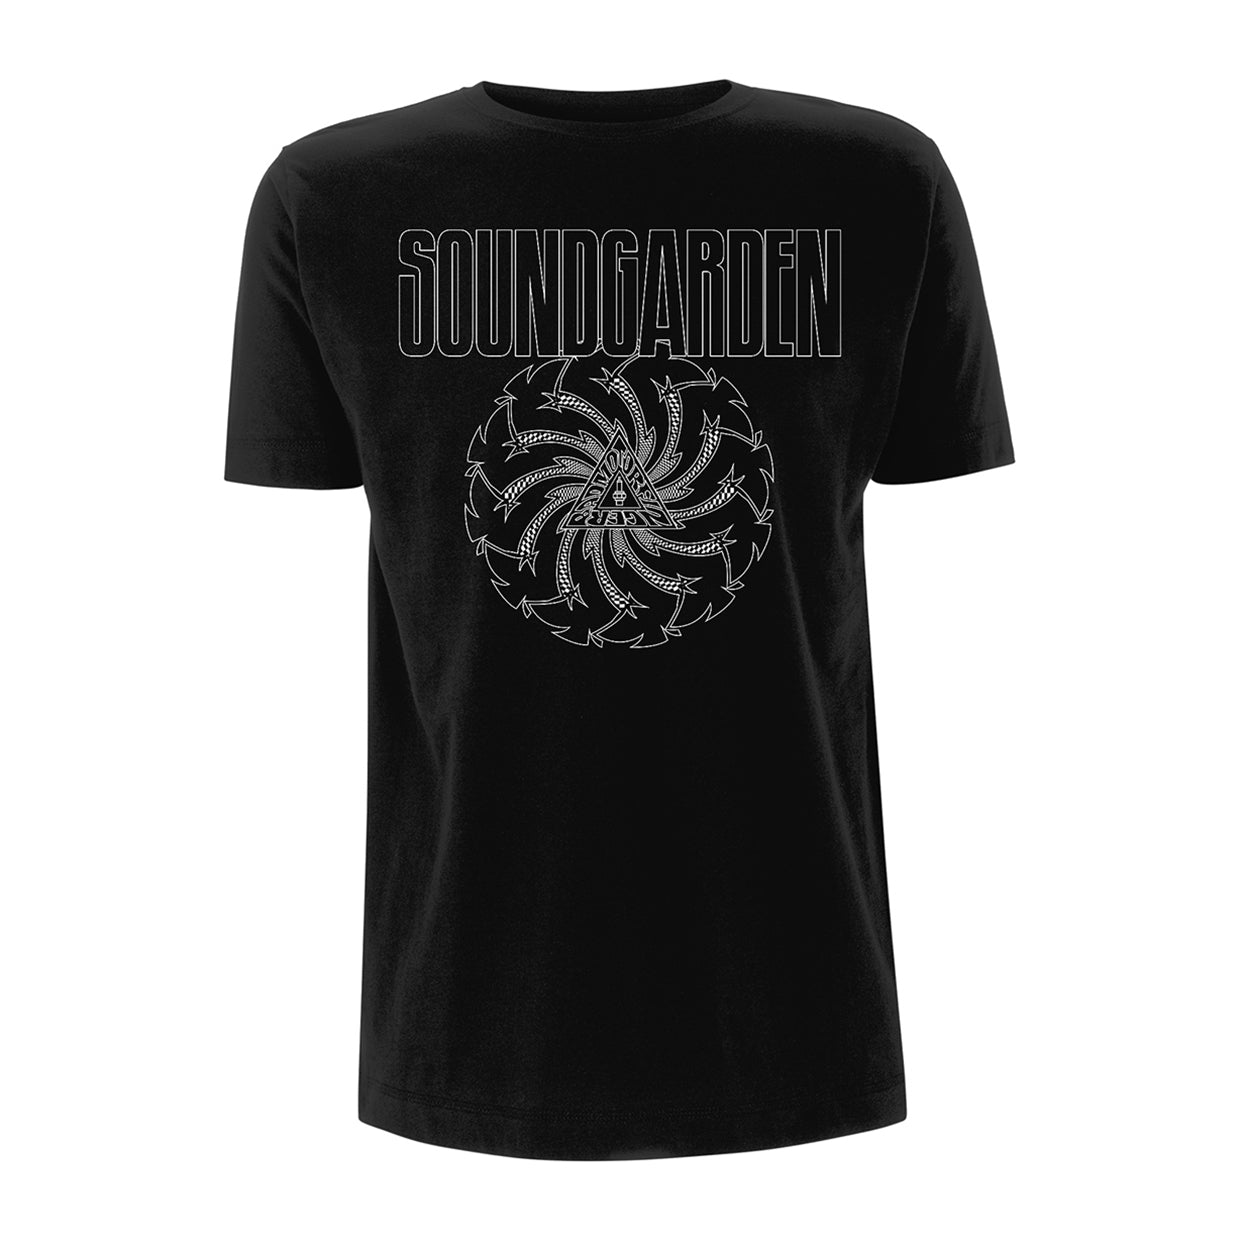 Soundgarden "Black Blade Badmotorfinger" T shirt